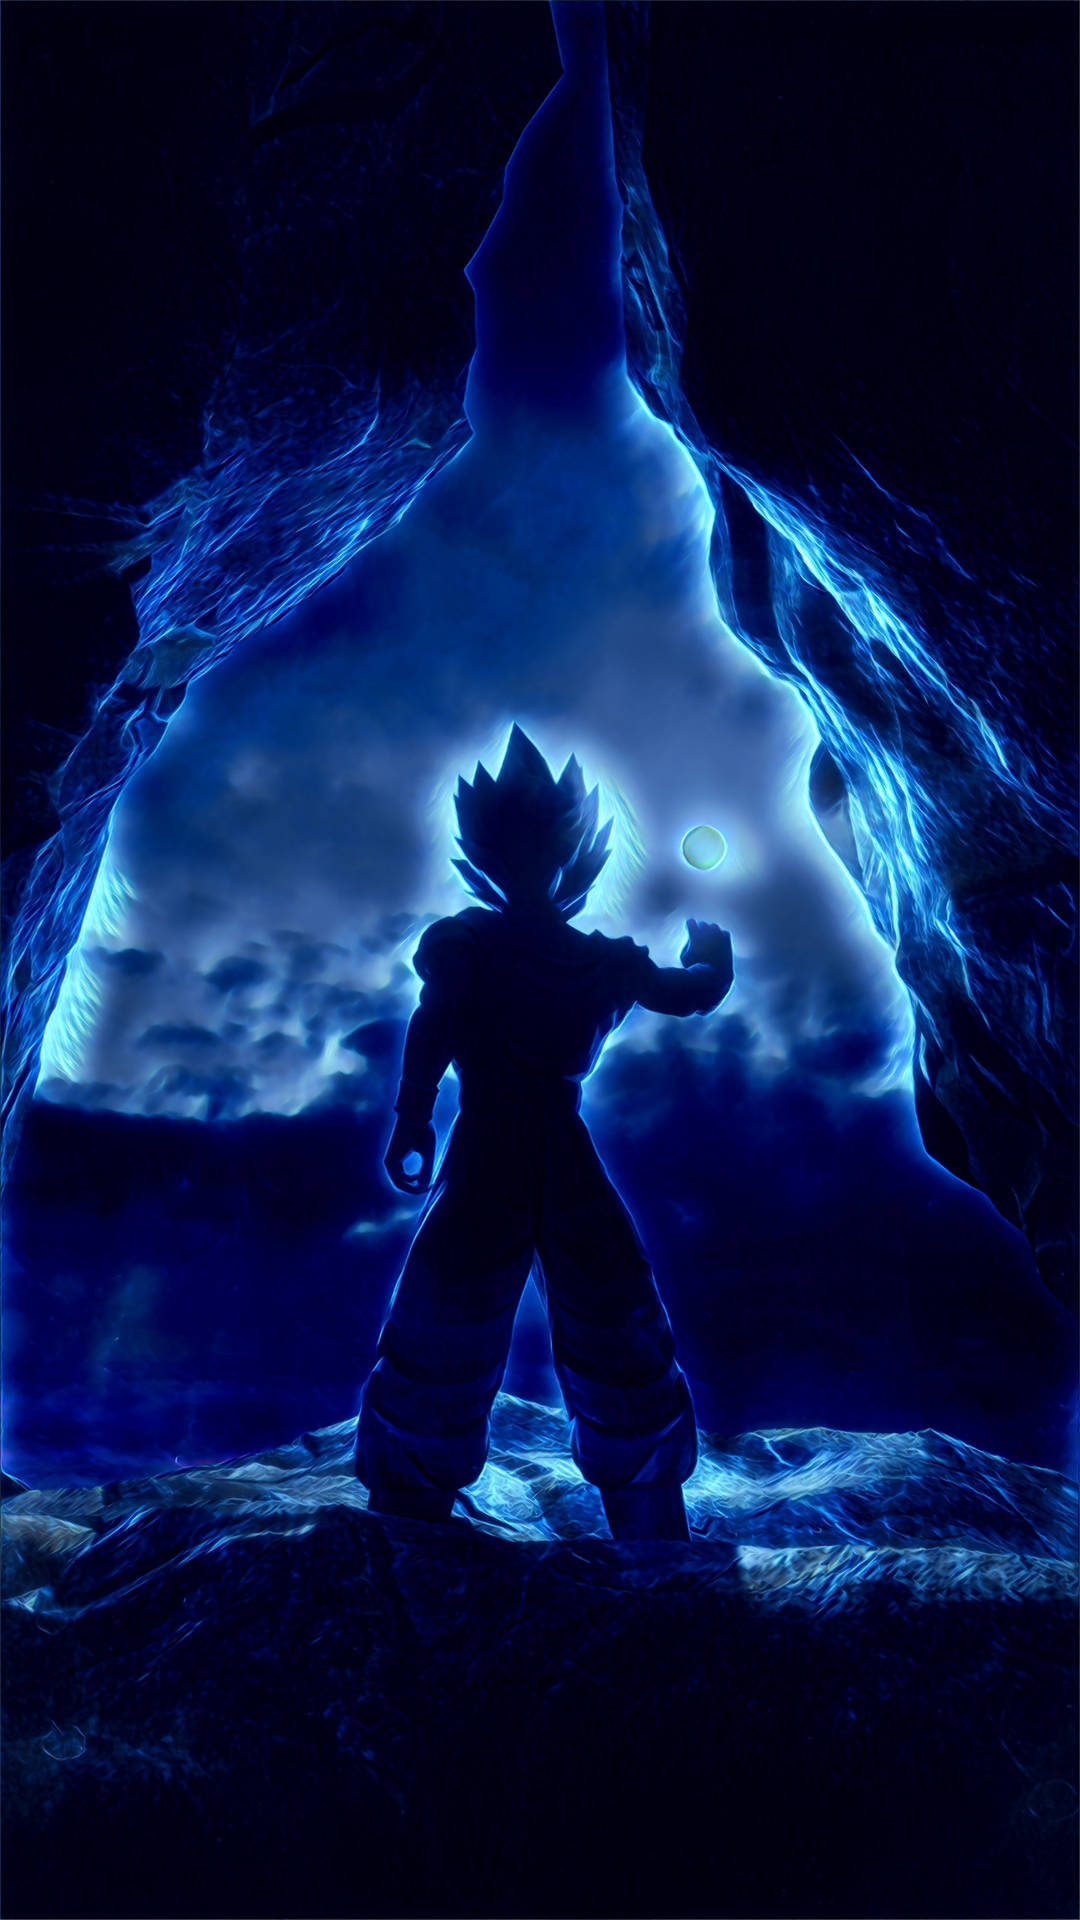 Super Saiyan Goku - The Ultimate Warrior Of Dbz In 4k Background